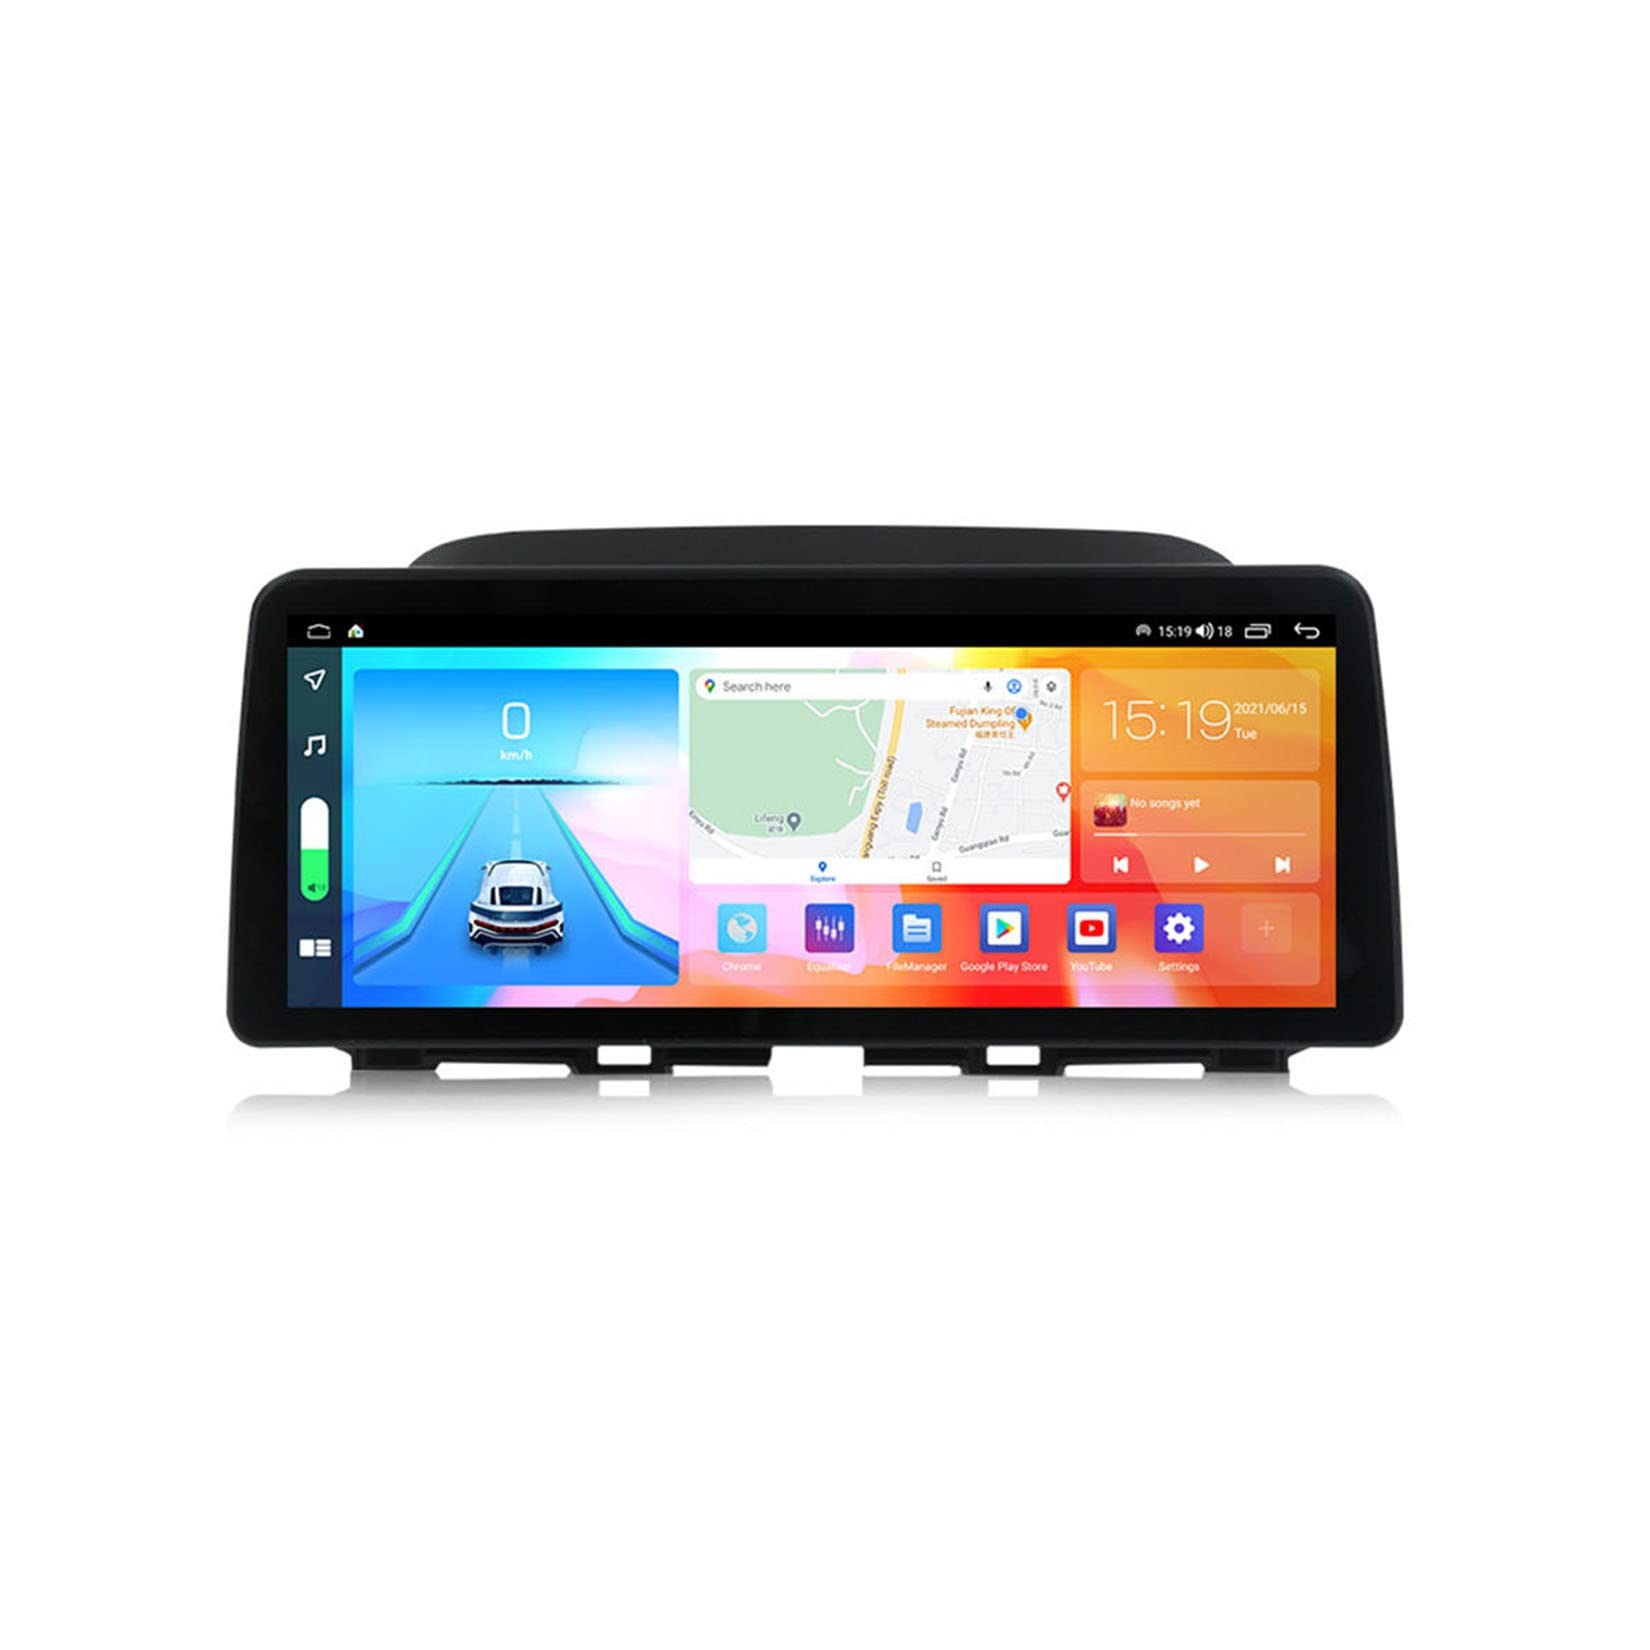 XIANGMAN 12.3 Zoll Android Autoradio Mit Bluetooth Für Mazda CX5 CX-5 CX 5 2014-2016 Rückfahrkamera Touchscreen Car Radio Unterstützt FM WiFi USB Aufladung Mirror Link (Color : L200 2G+32G)